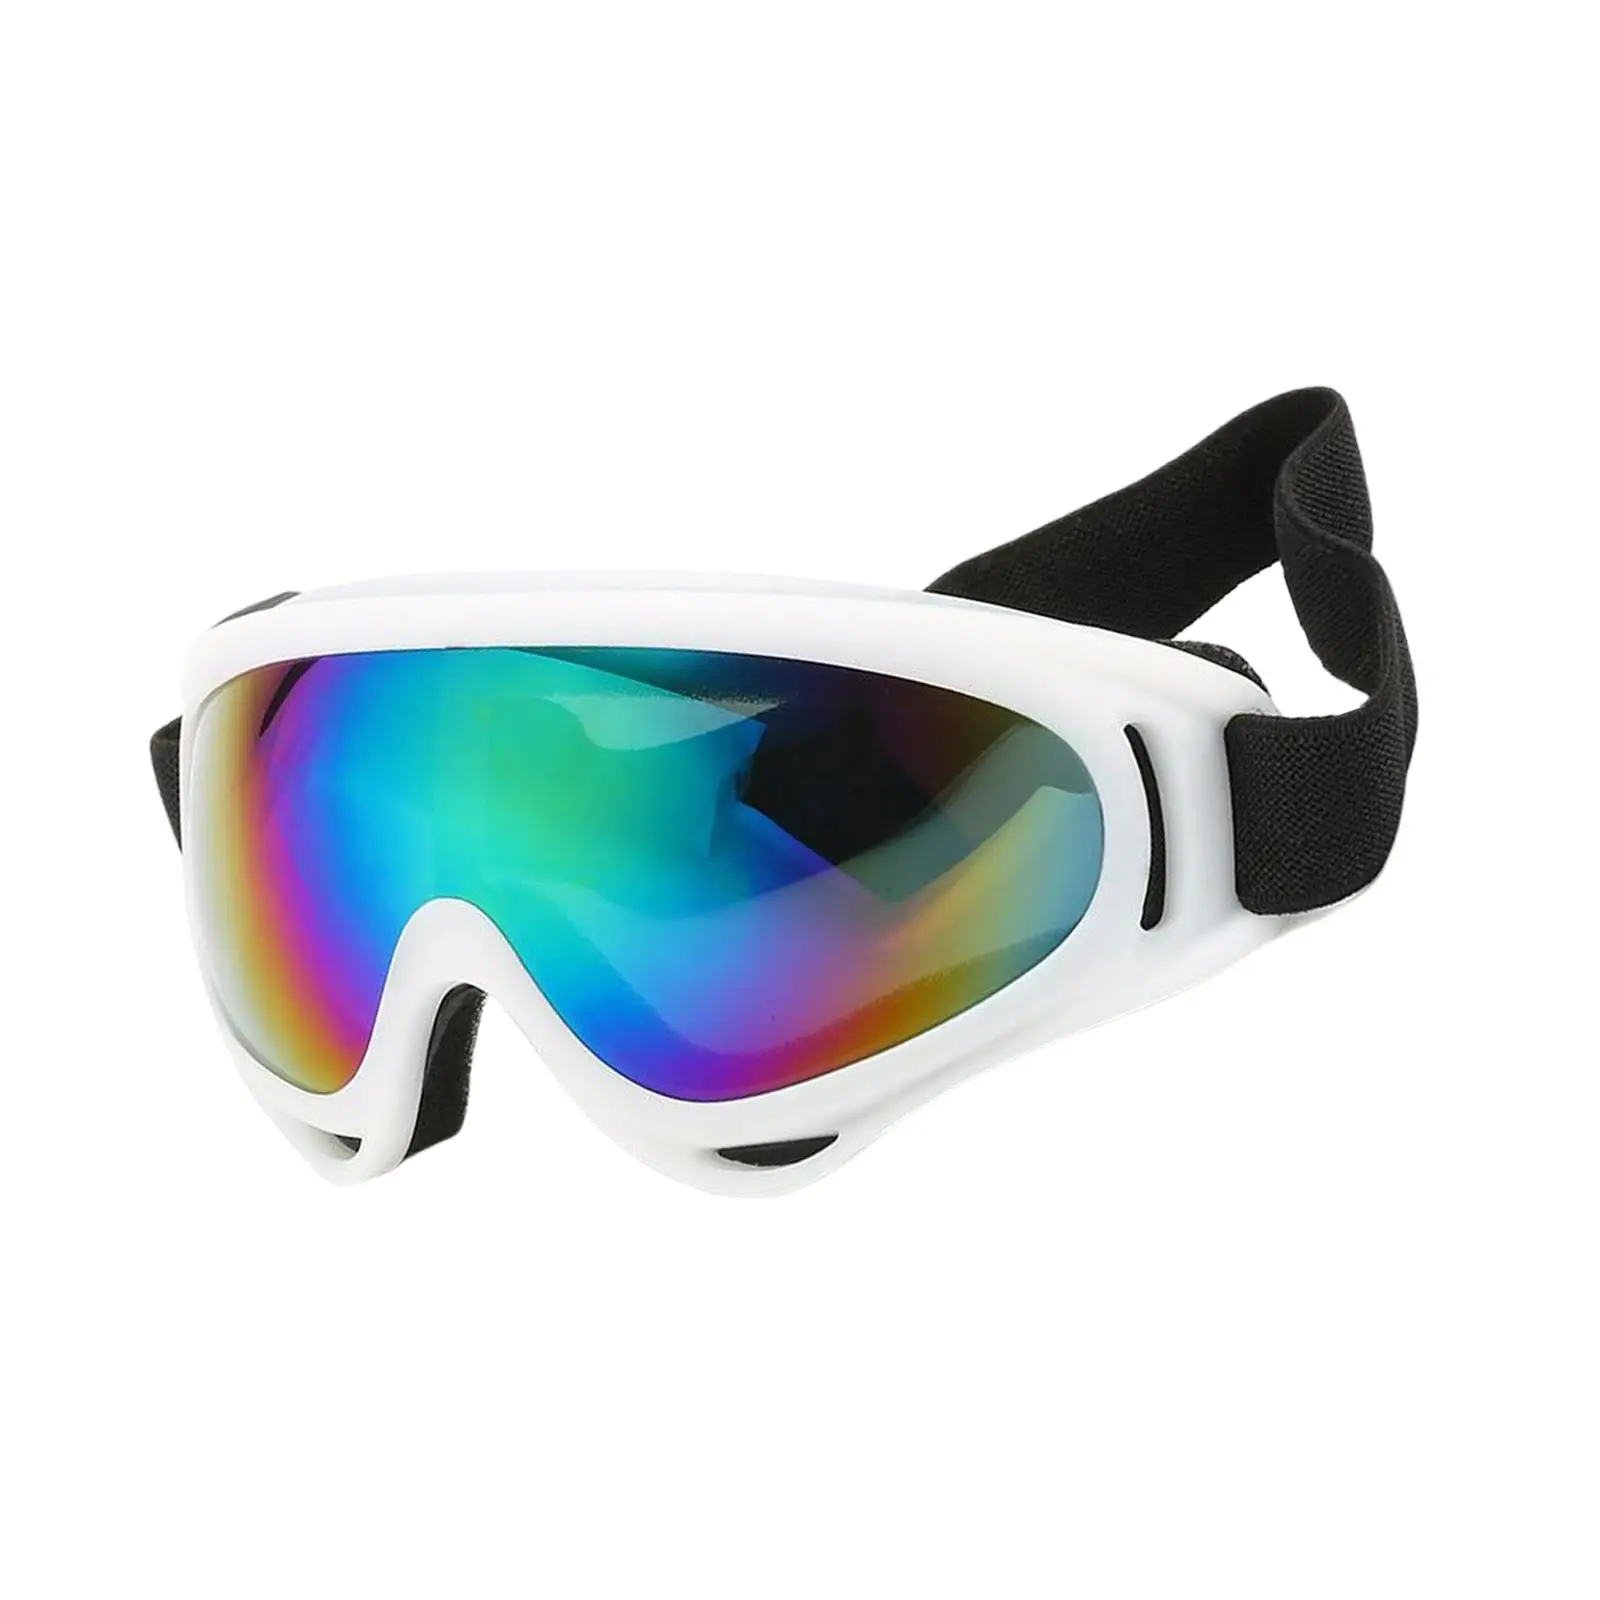 

Goggles Glasses Sunglasses Motorcycle Protective Skiing Eyewear Bicycle